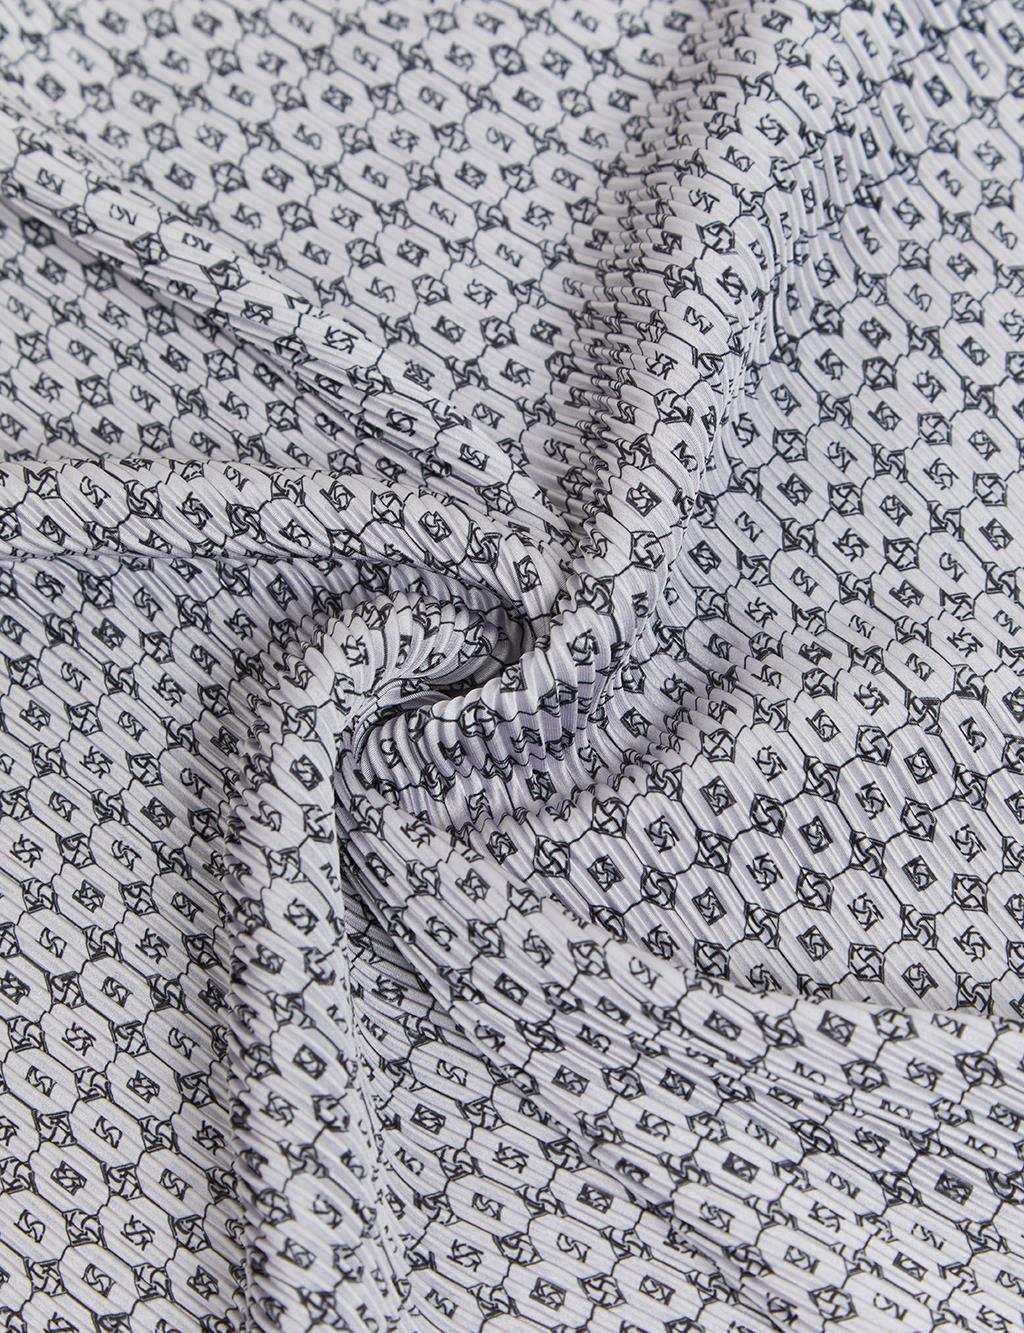 Hexagonal Monogram Pleated Scarf Grey